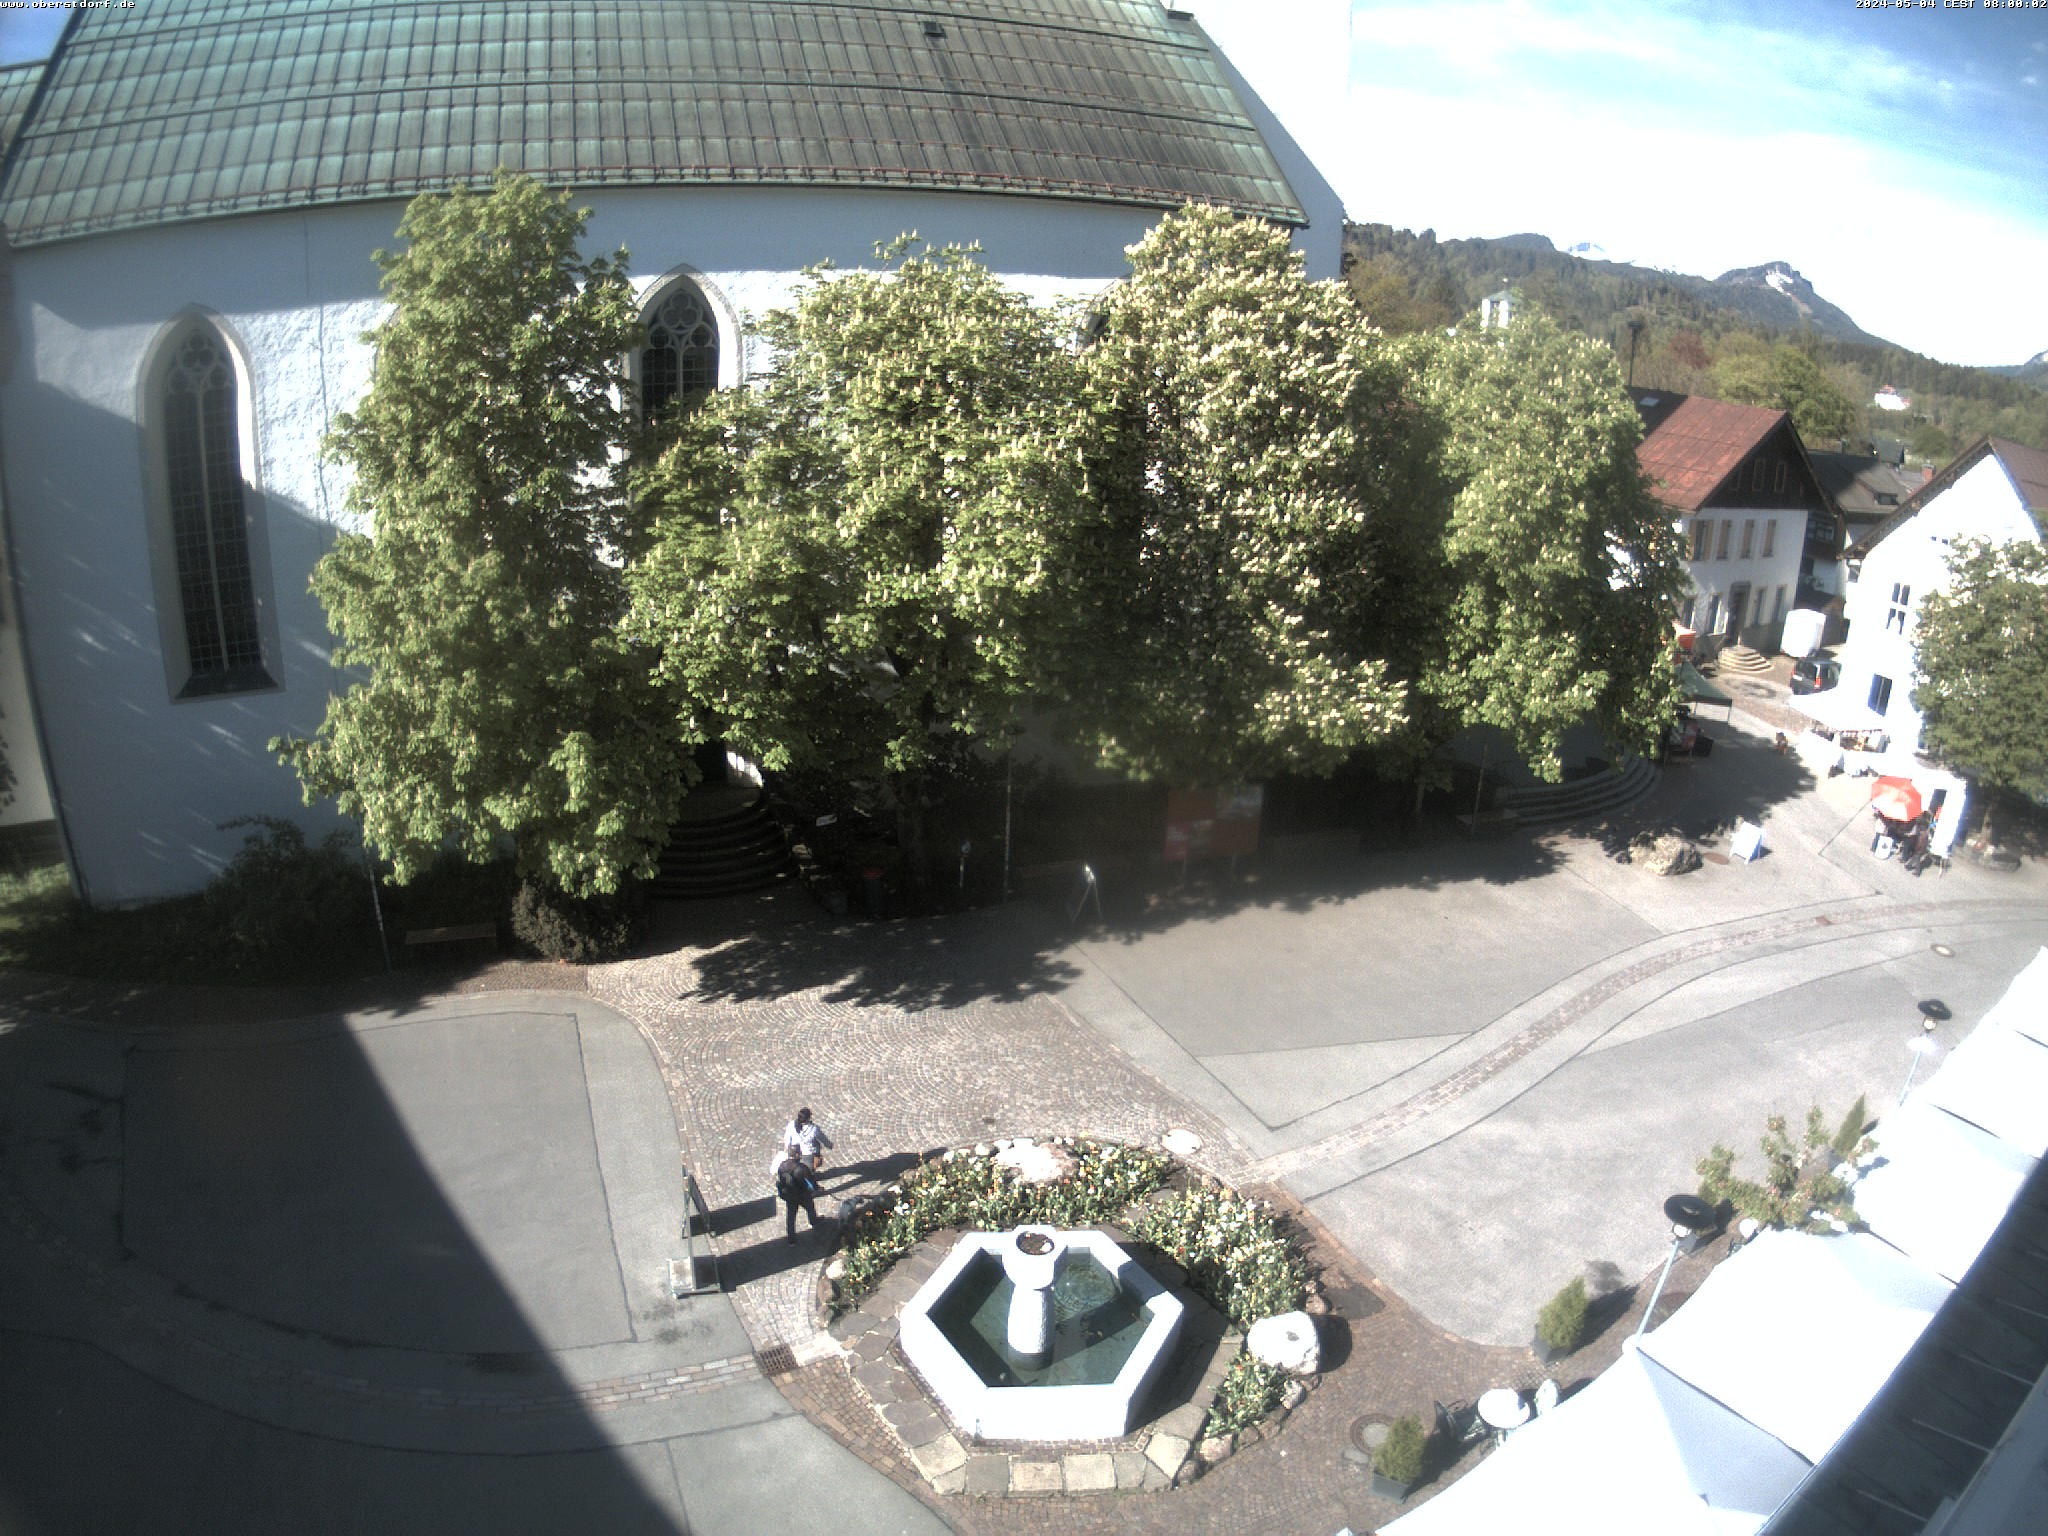 Webcam Marktplatz